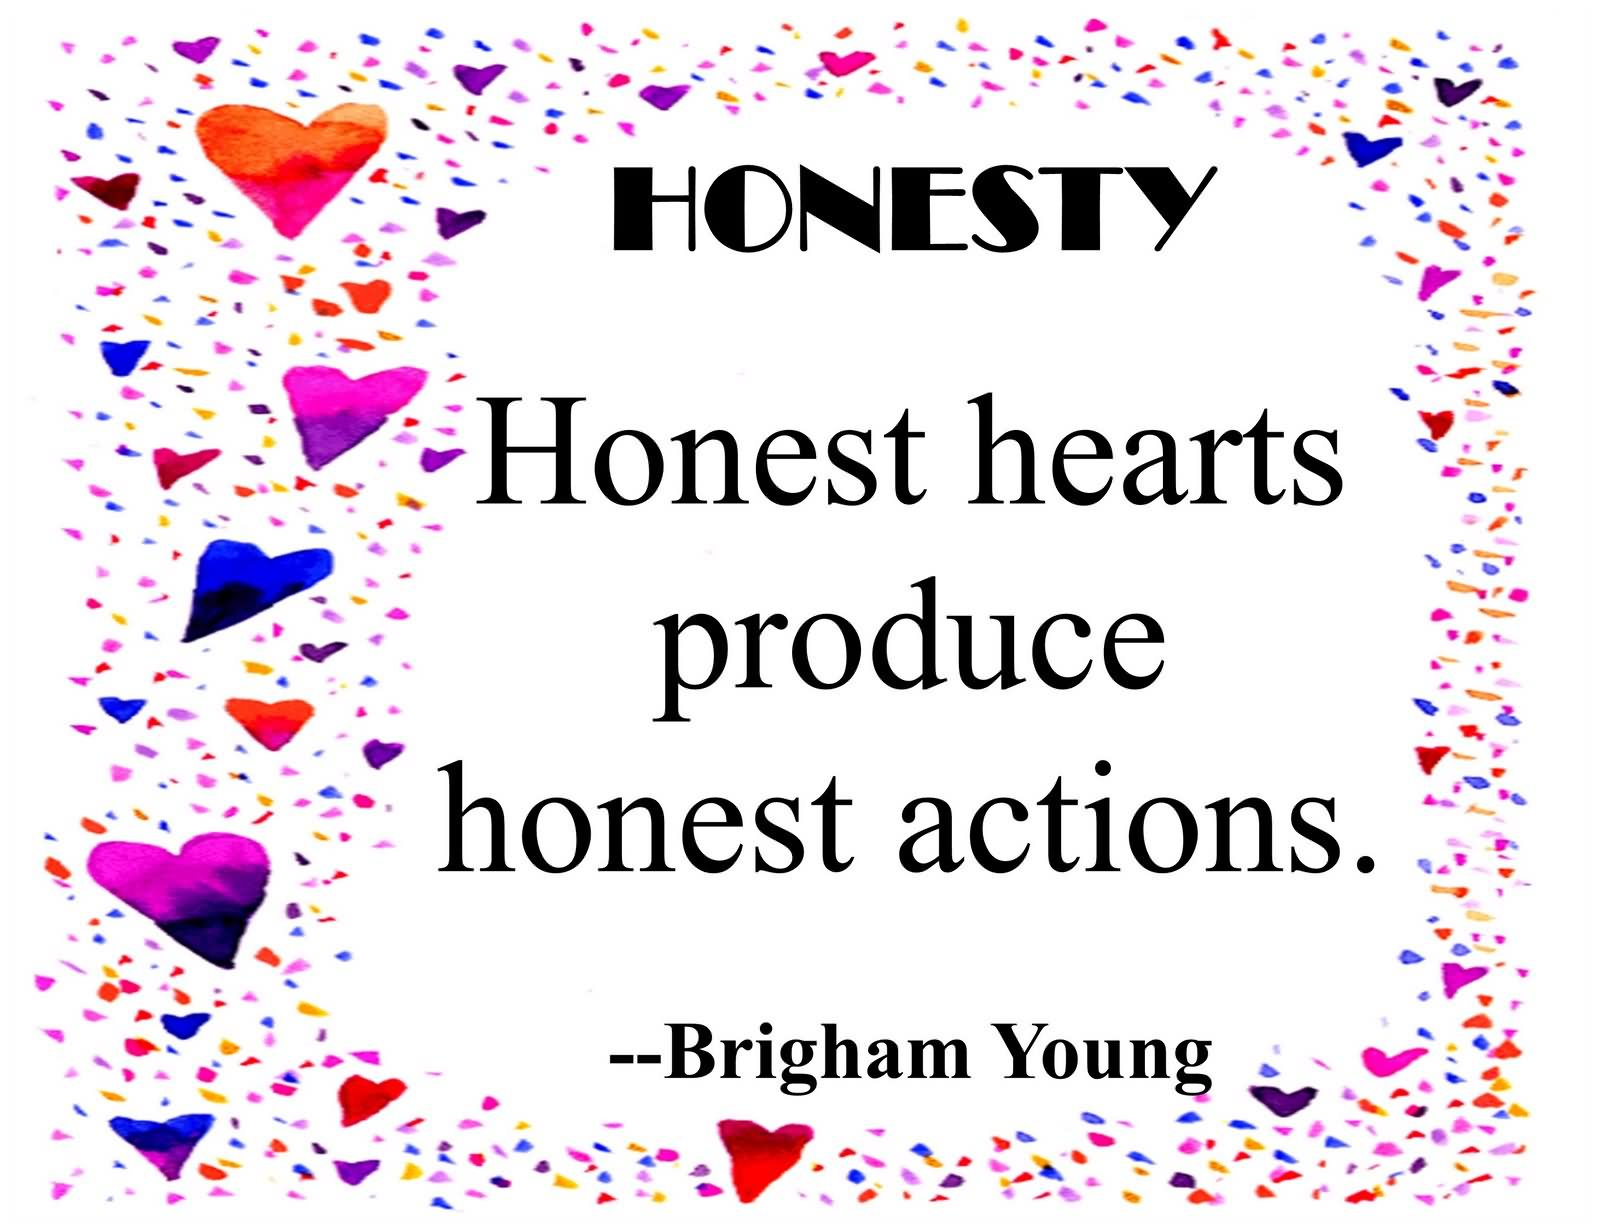 Honesty – Honest hearts produce honest actions.